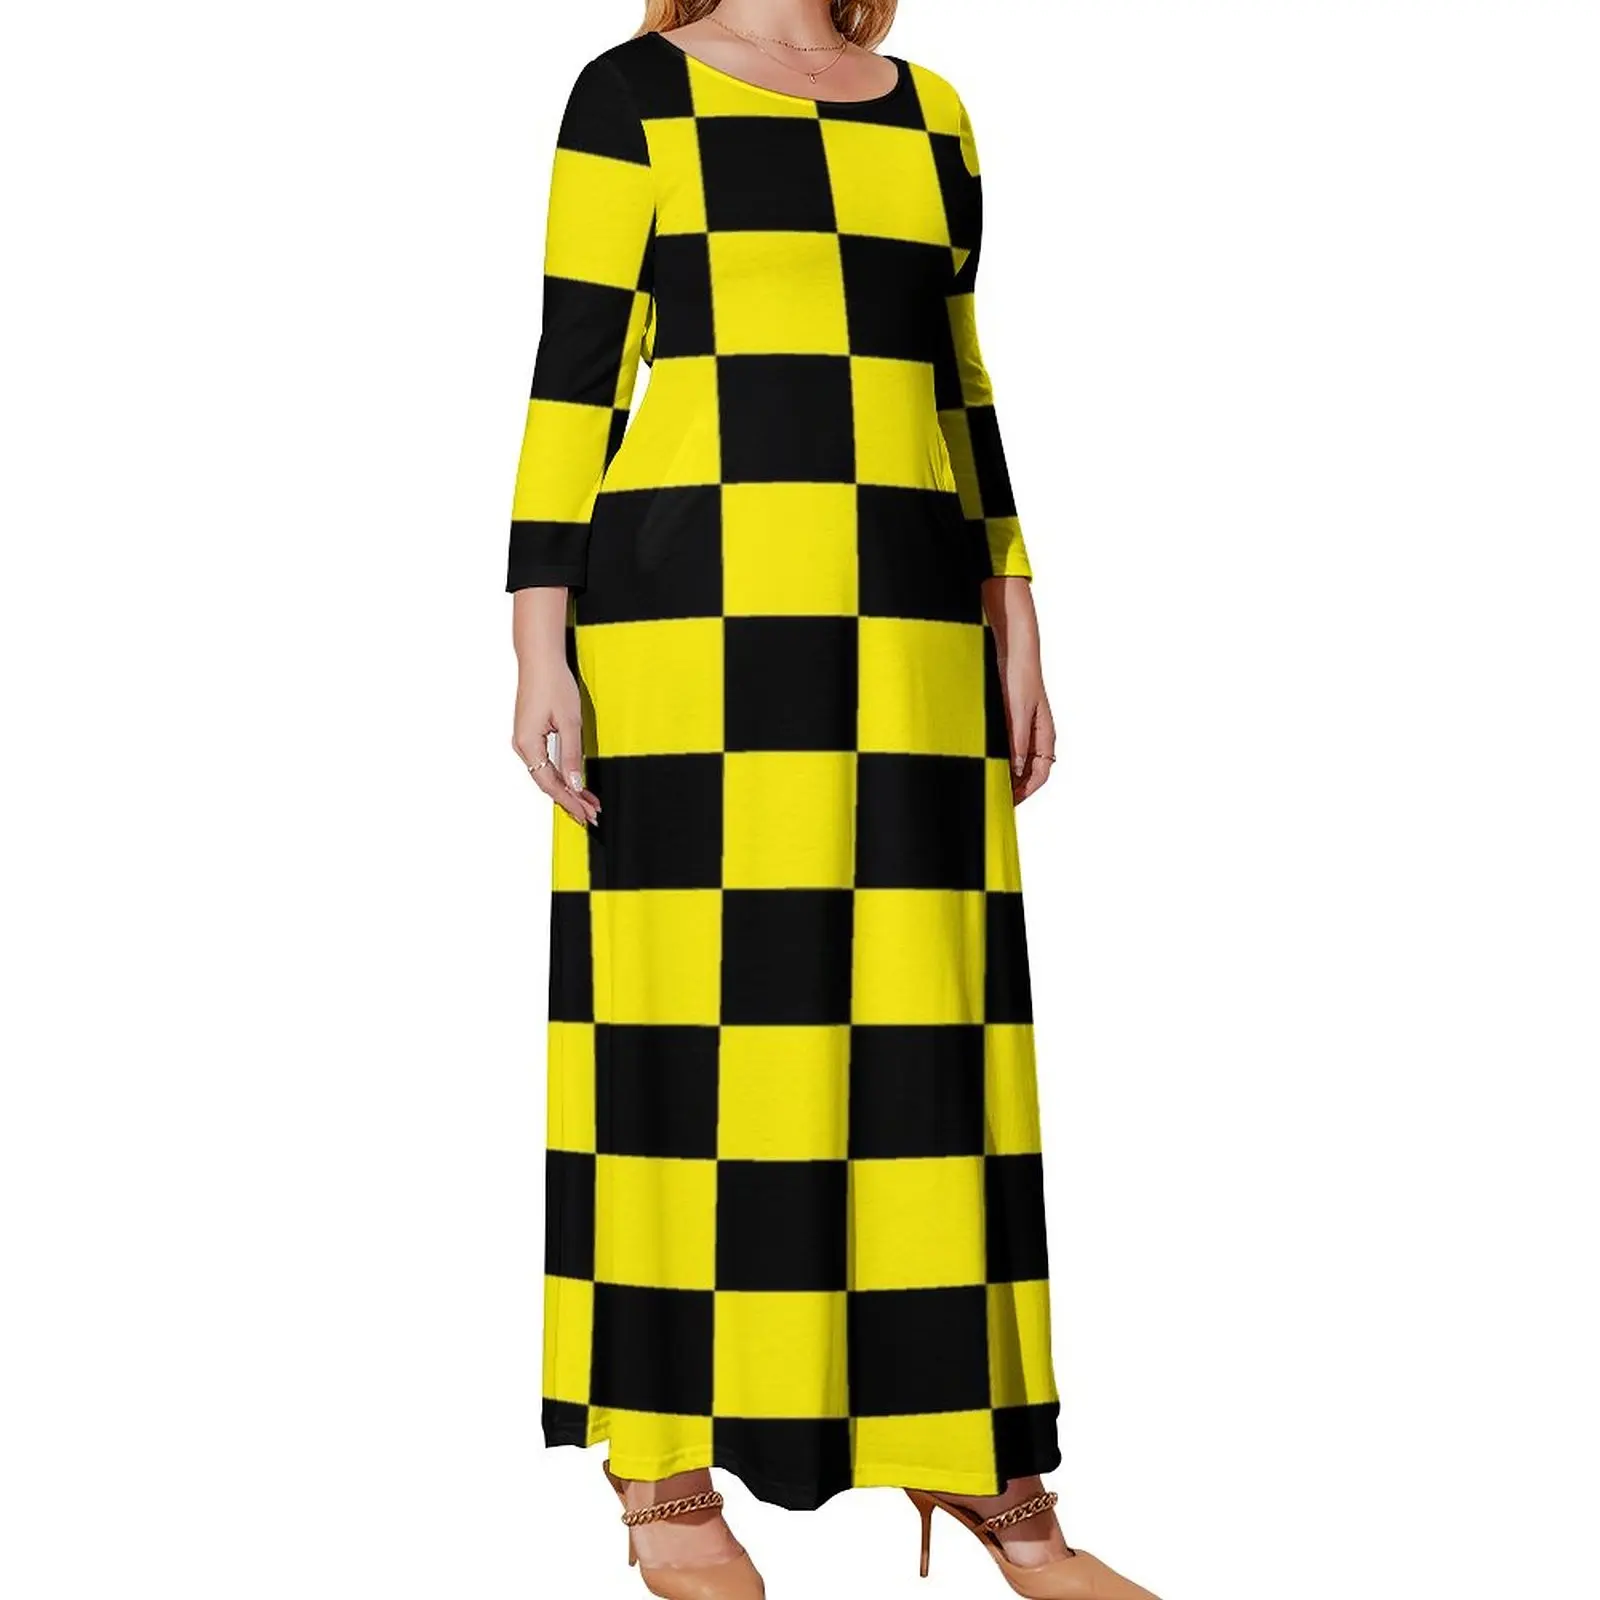 Two Tone Black And Yellow Dress Mod Checkers Street Wear Beach Dresses Long Sleeve Cute Maxi Dress Spring Plus Size Vestidos